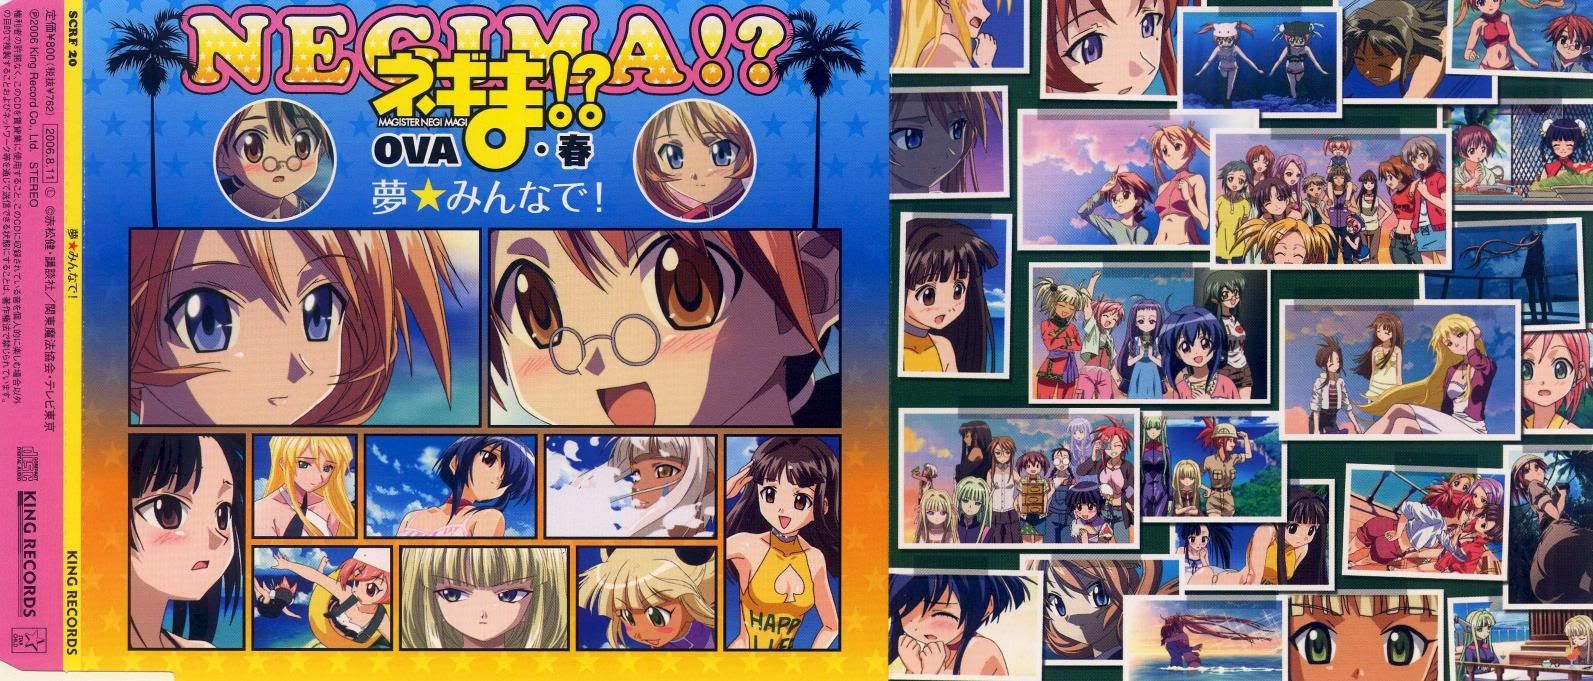 Negima Haru OVA OP/ED Single Cover.